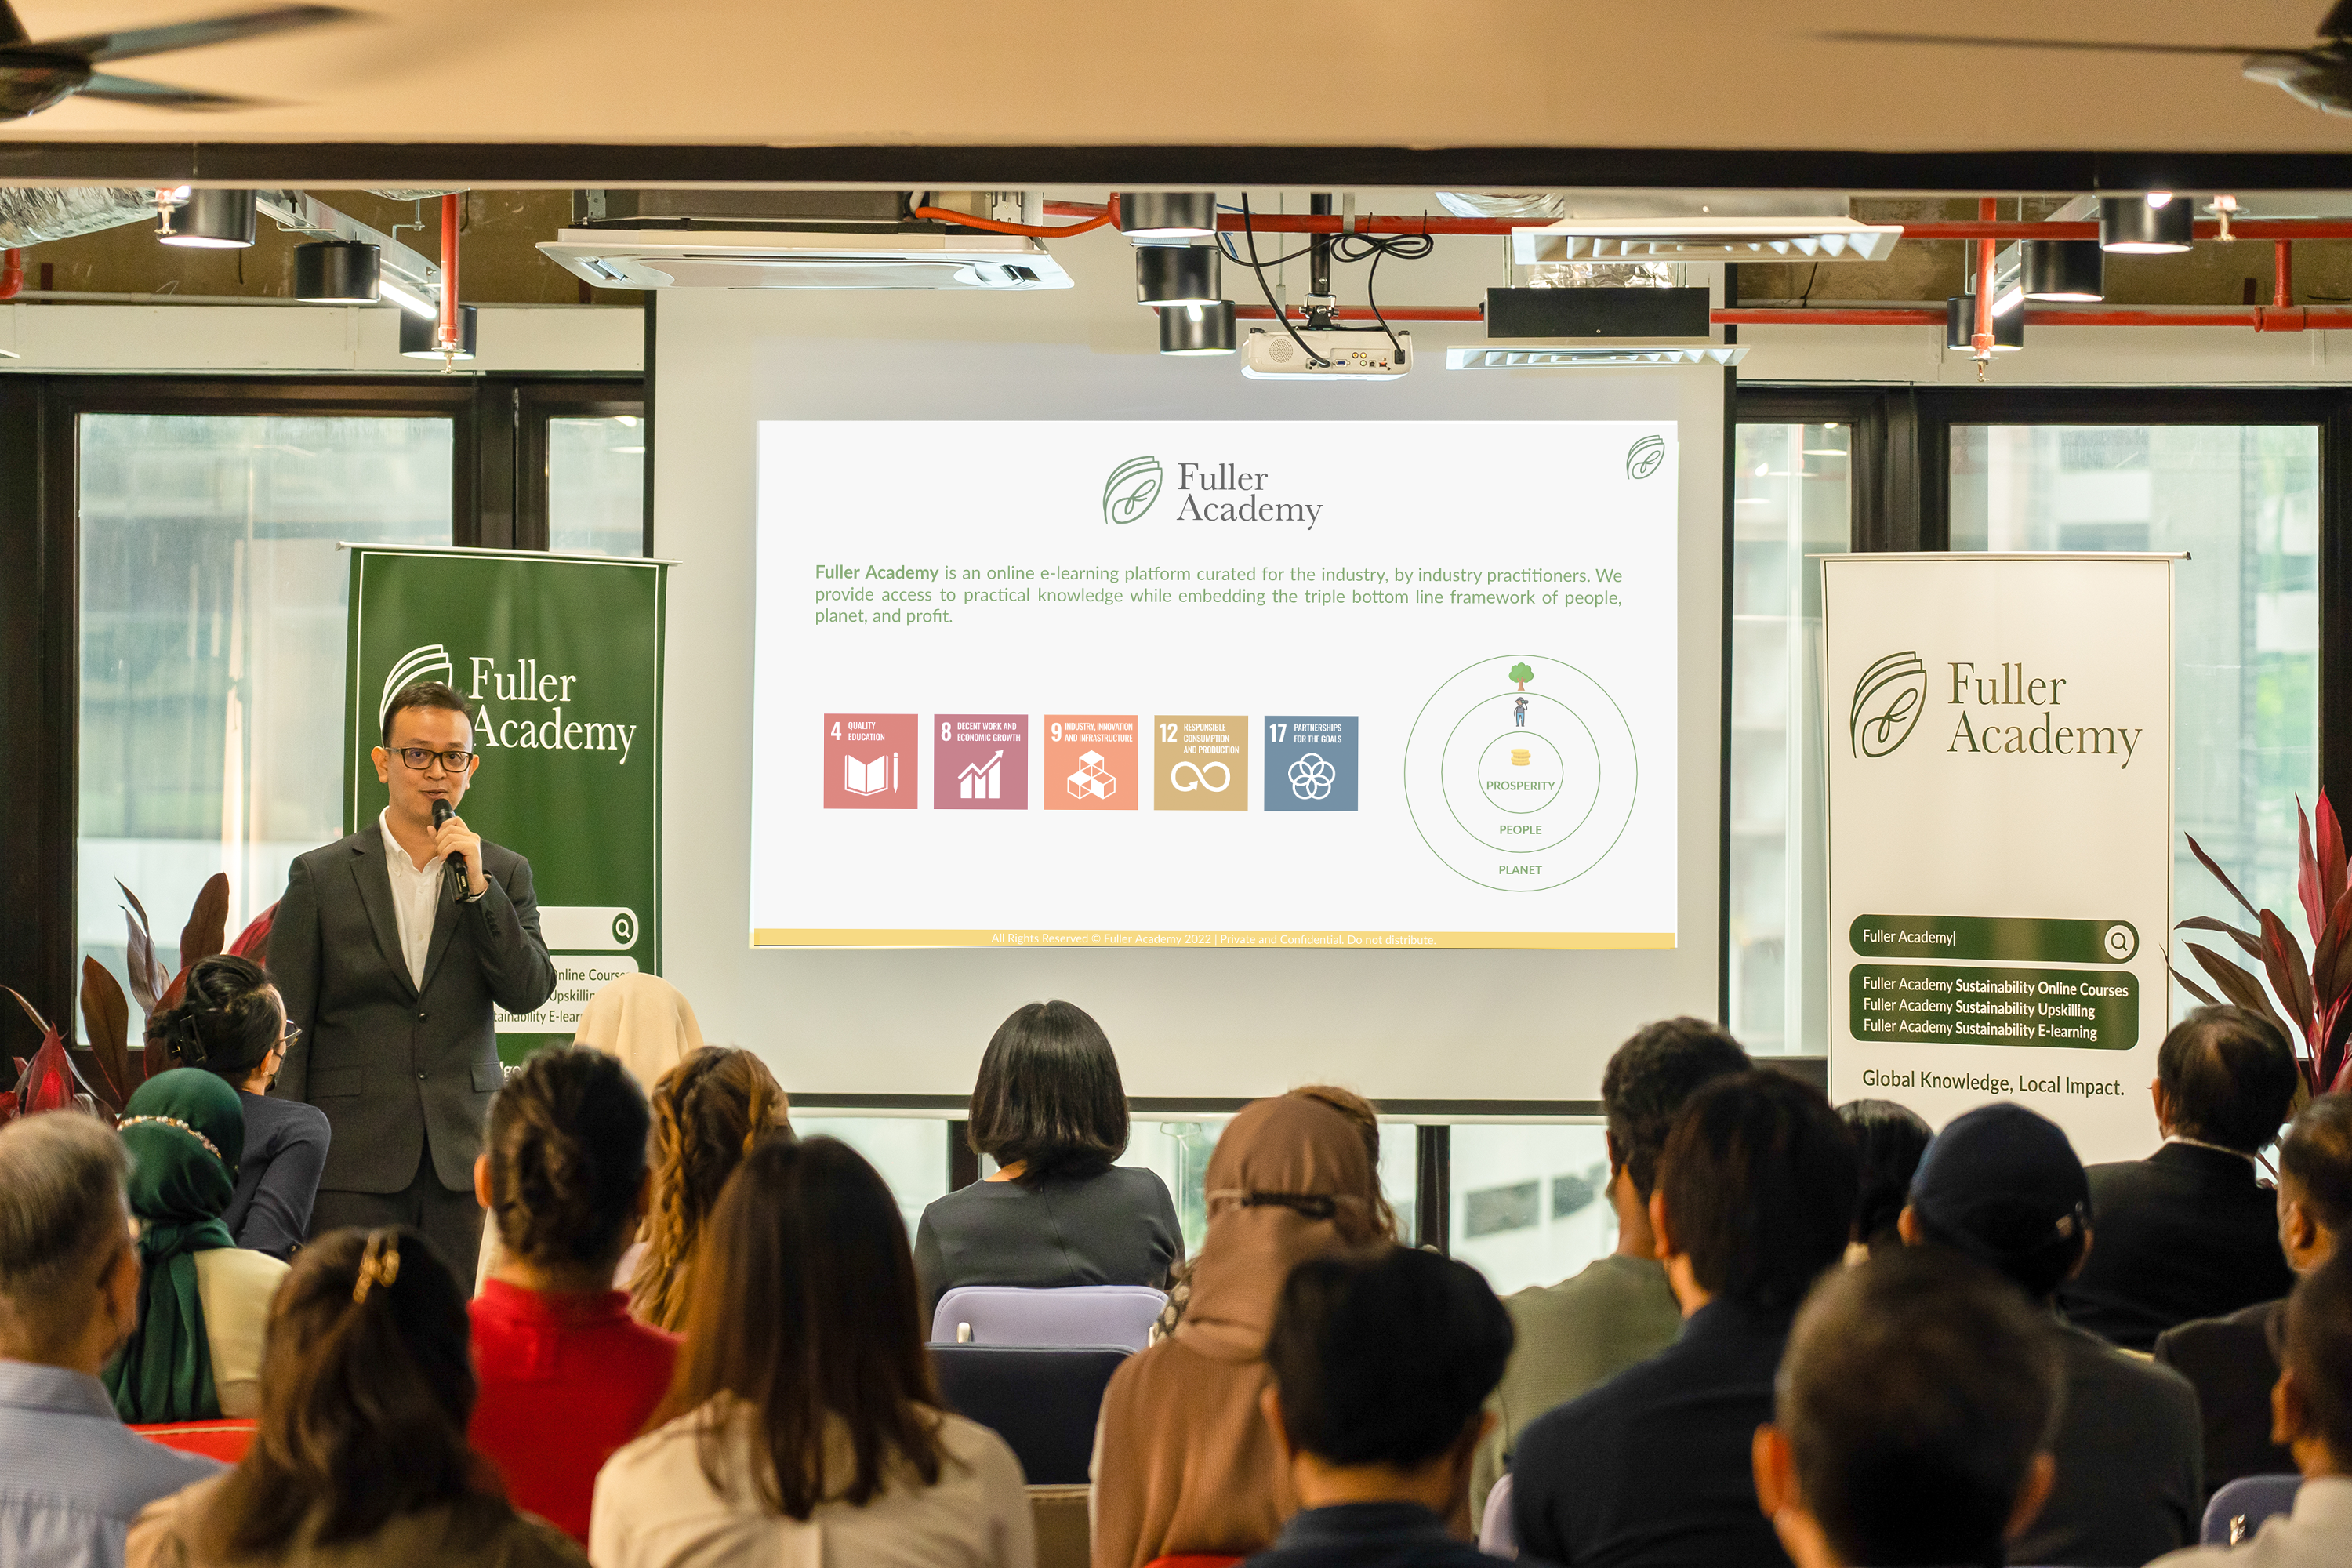 Fuller academy targets to upskill 30,000 asean talents in sustainability | weirdkaya